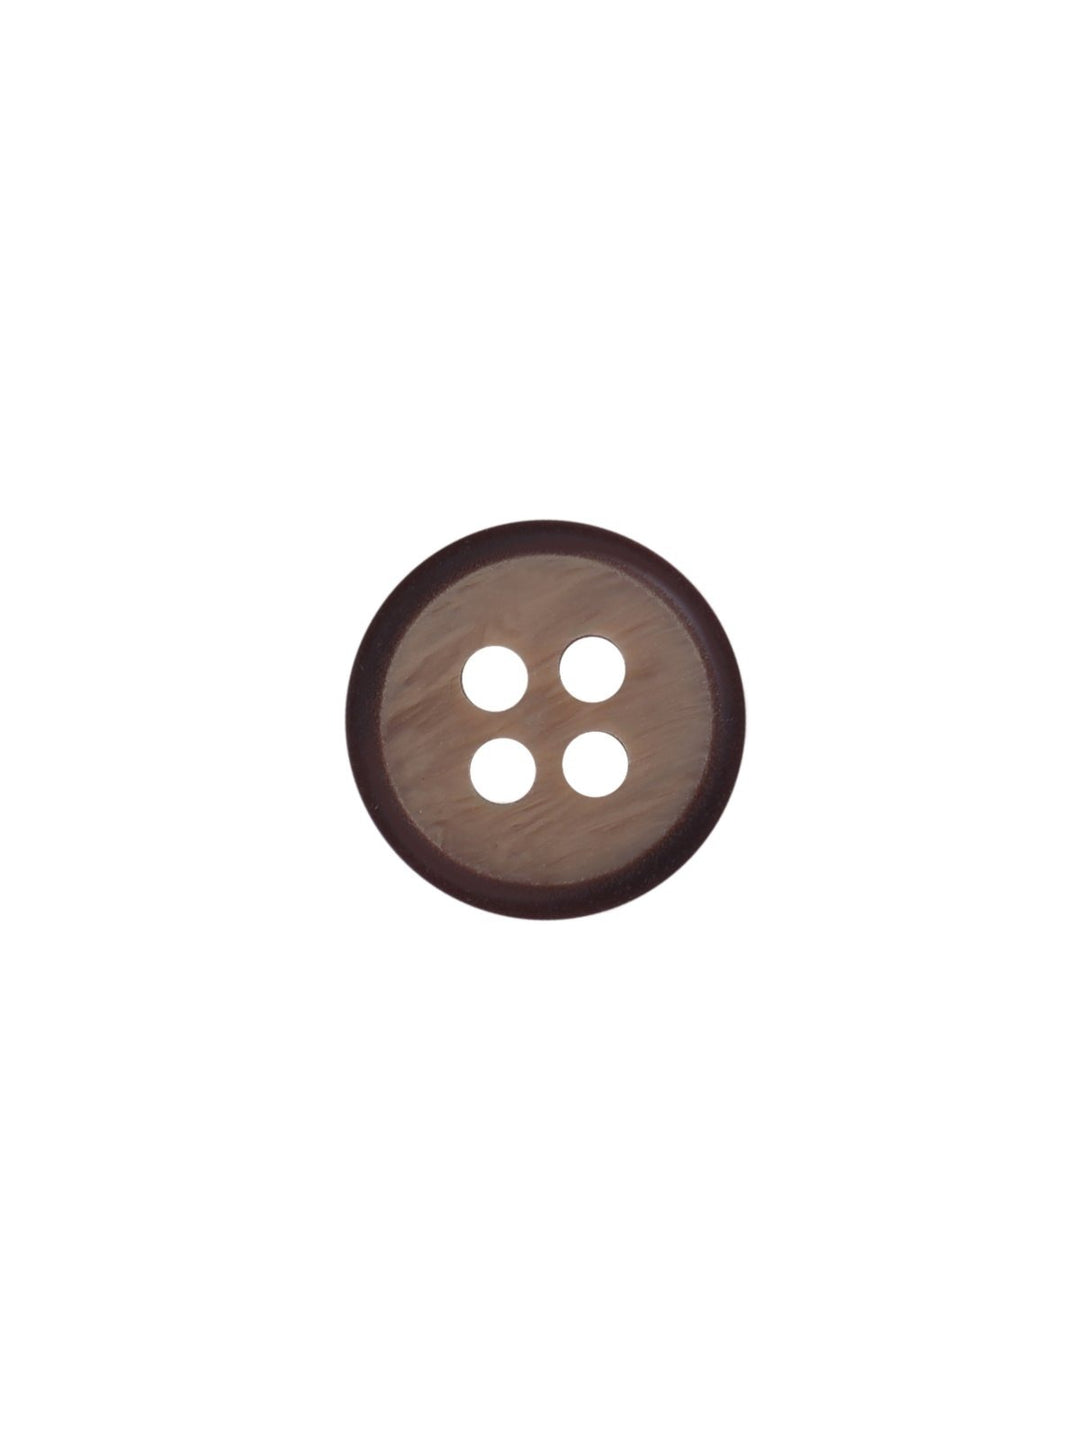 Excellent Wooden Brown Color Round Shape Shirt Button